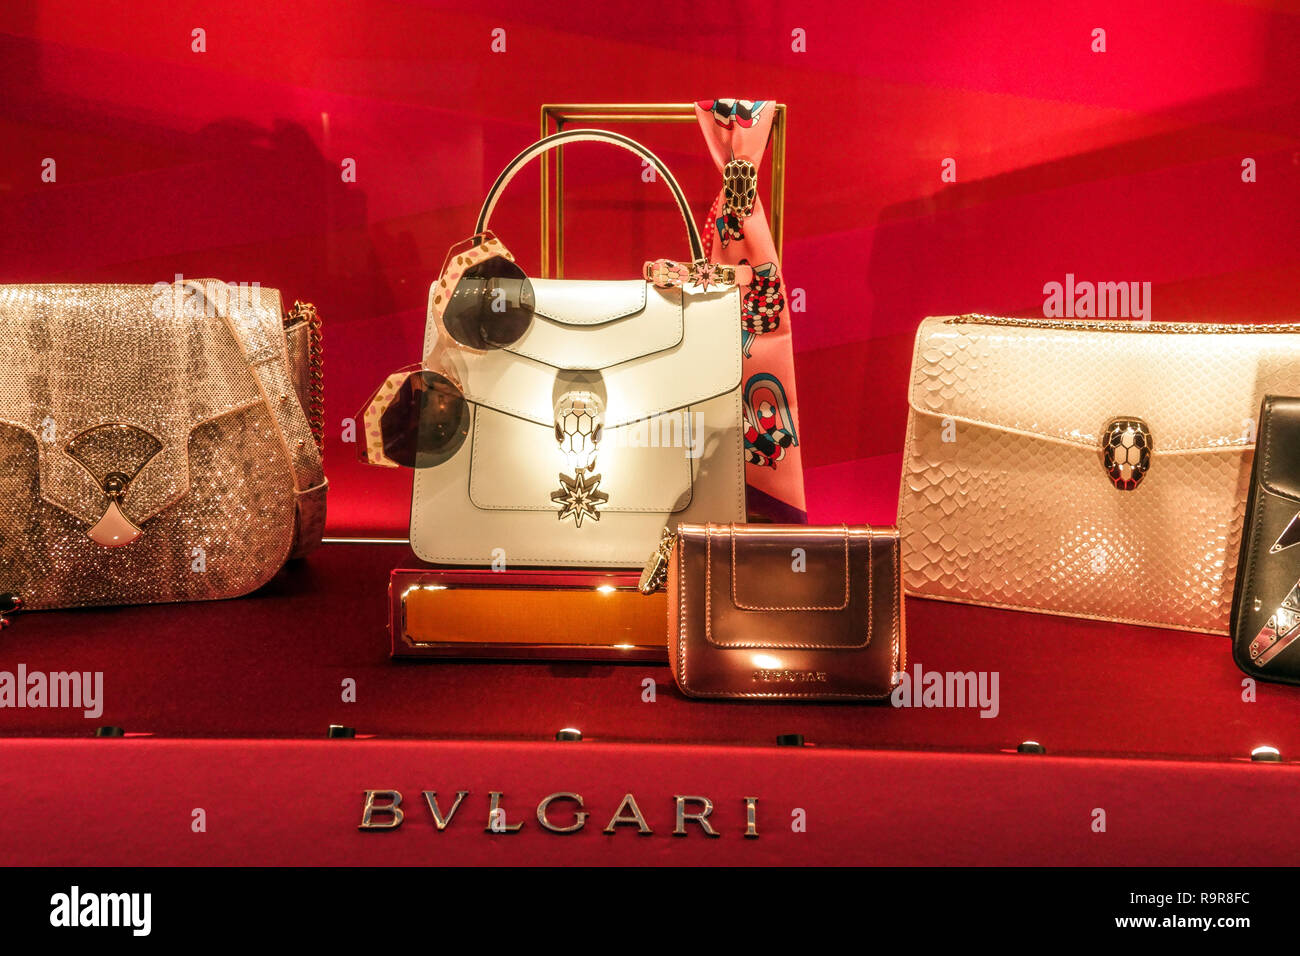 Bvlgari store, handbag in shop window display, Prague Czech Republic Stock Photo